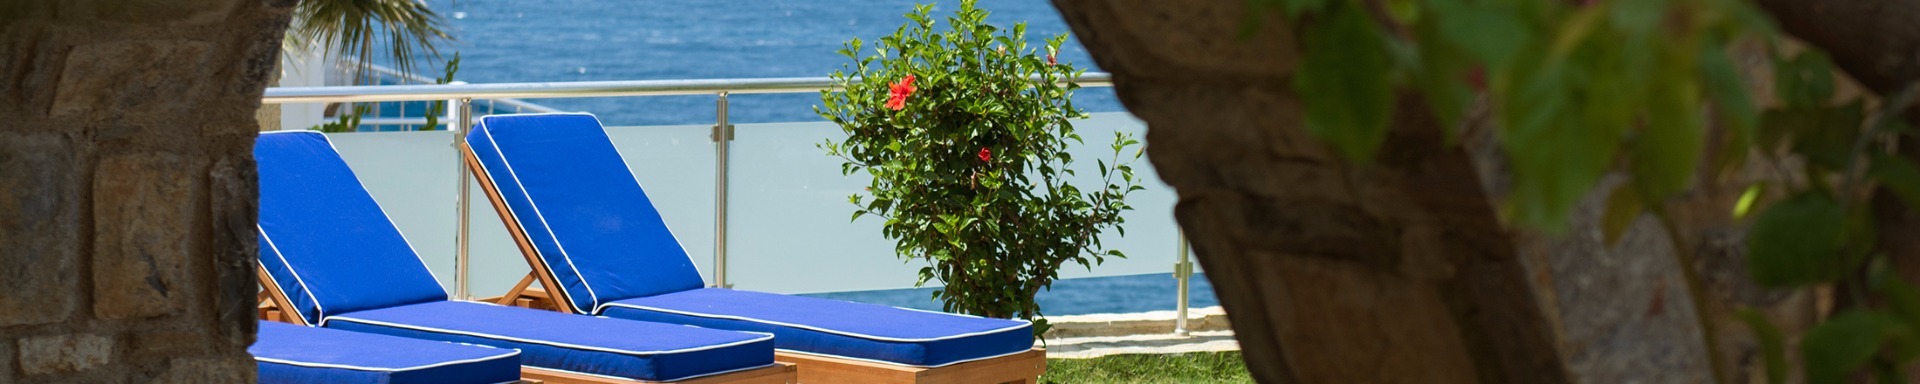 Aegean sea lifestyle Yalikavak Bodrum holiday villas for rent